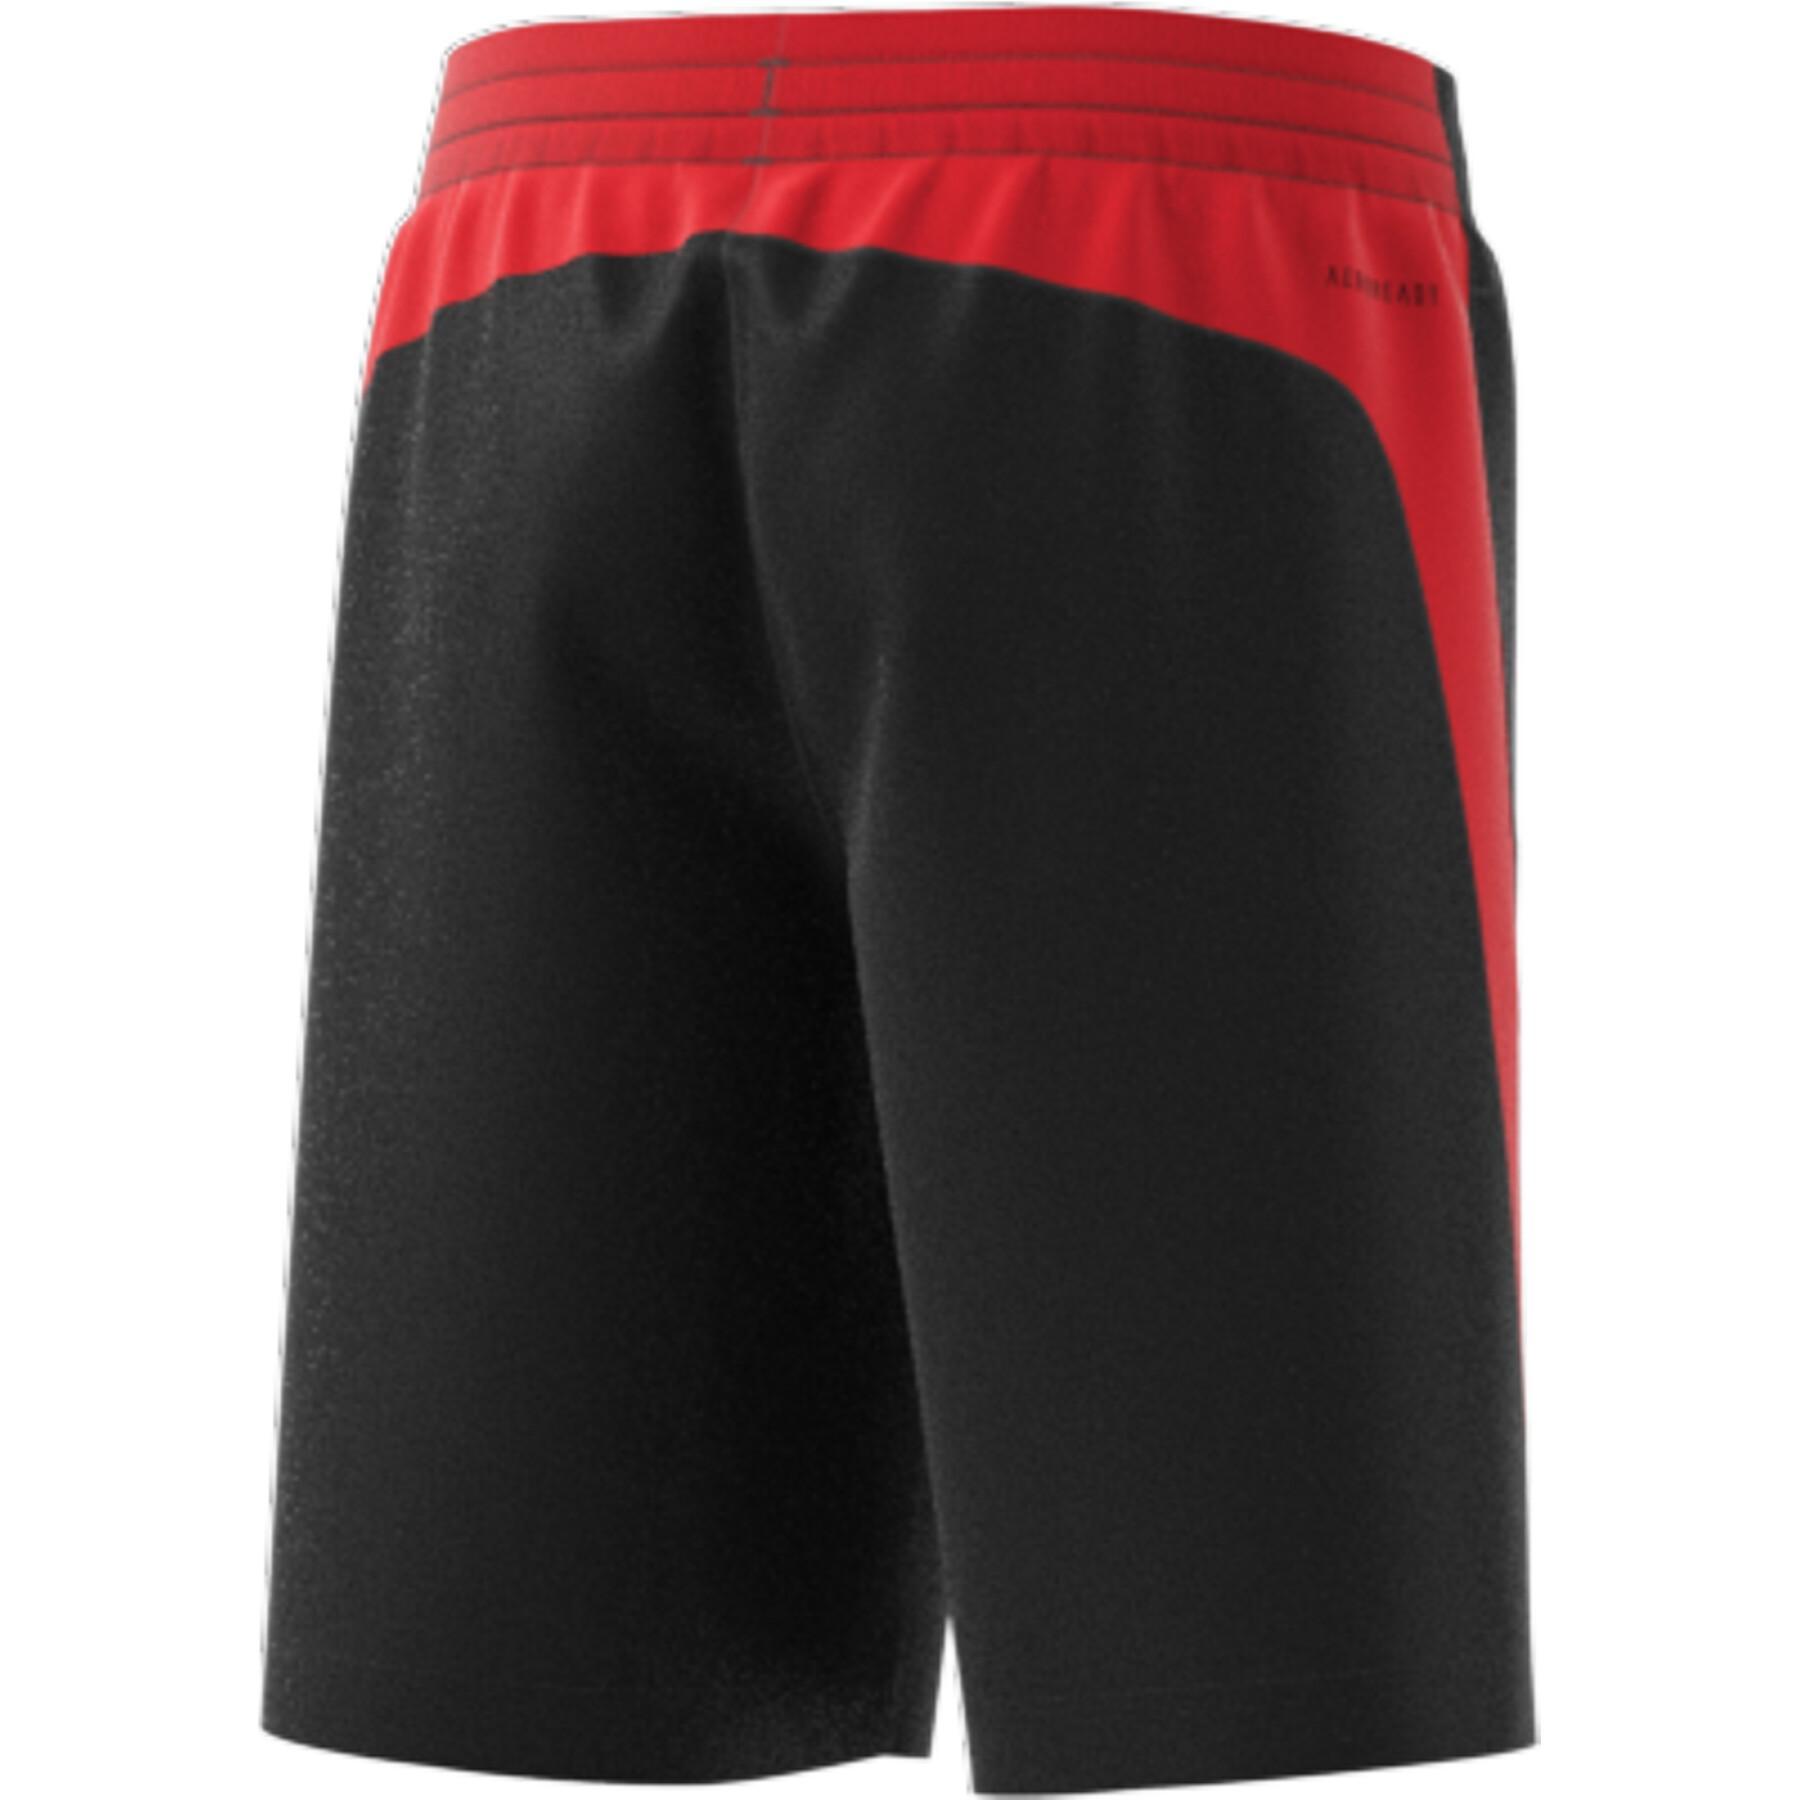 Children's shorts adidas AEROREADY X Football-Inspired